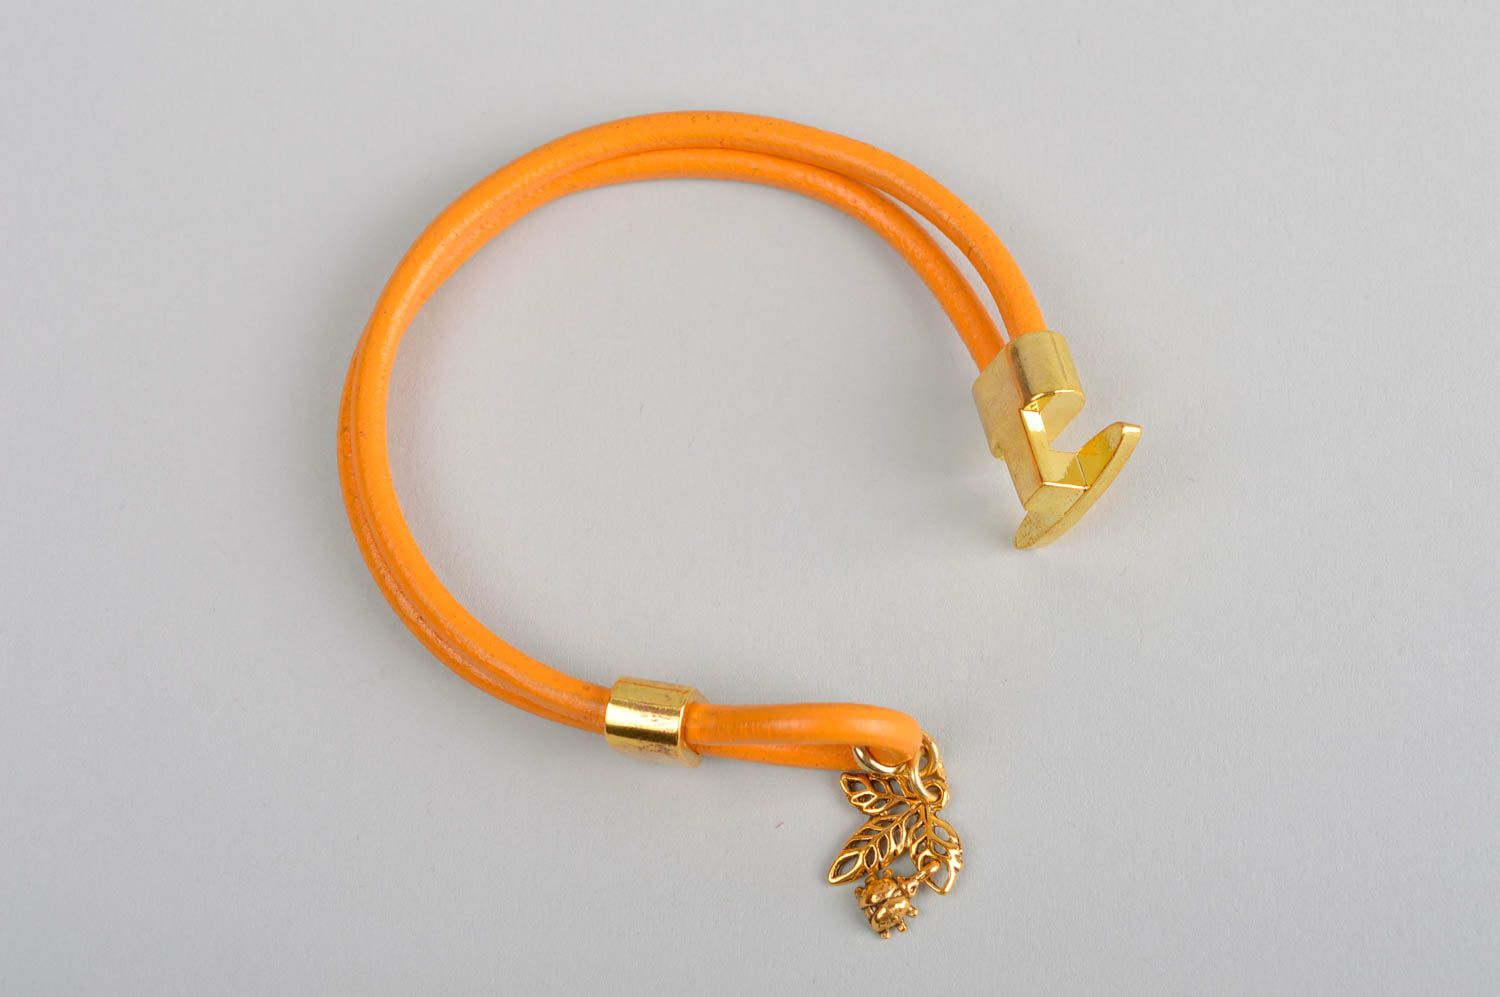 Handmade leather wrist bracelet artisan jewelry designs accessories for girls photo 5